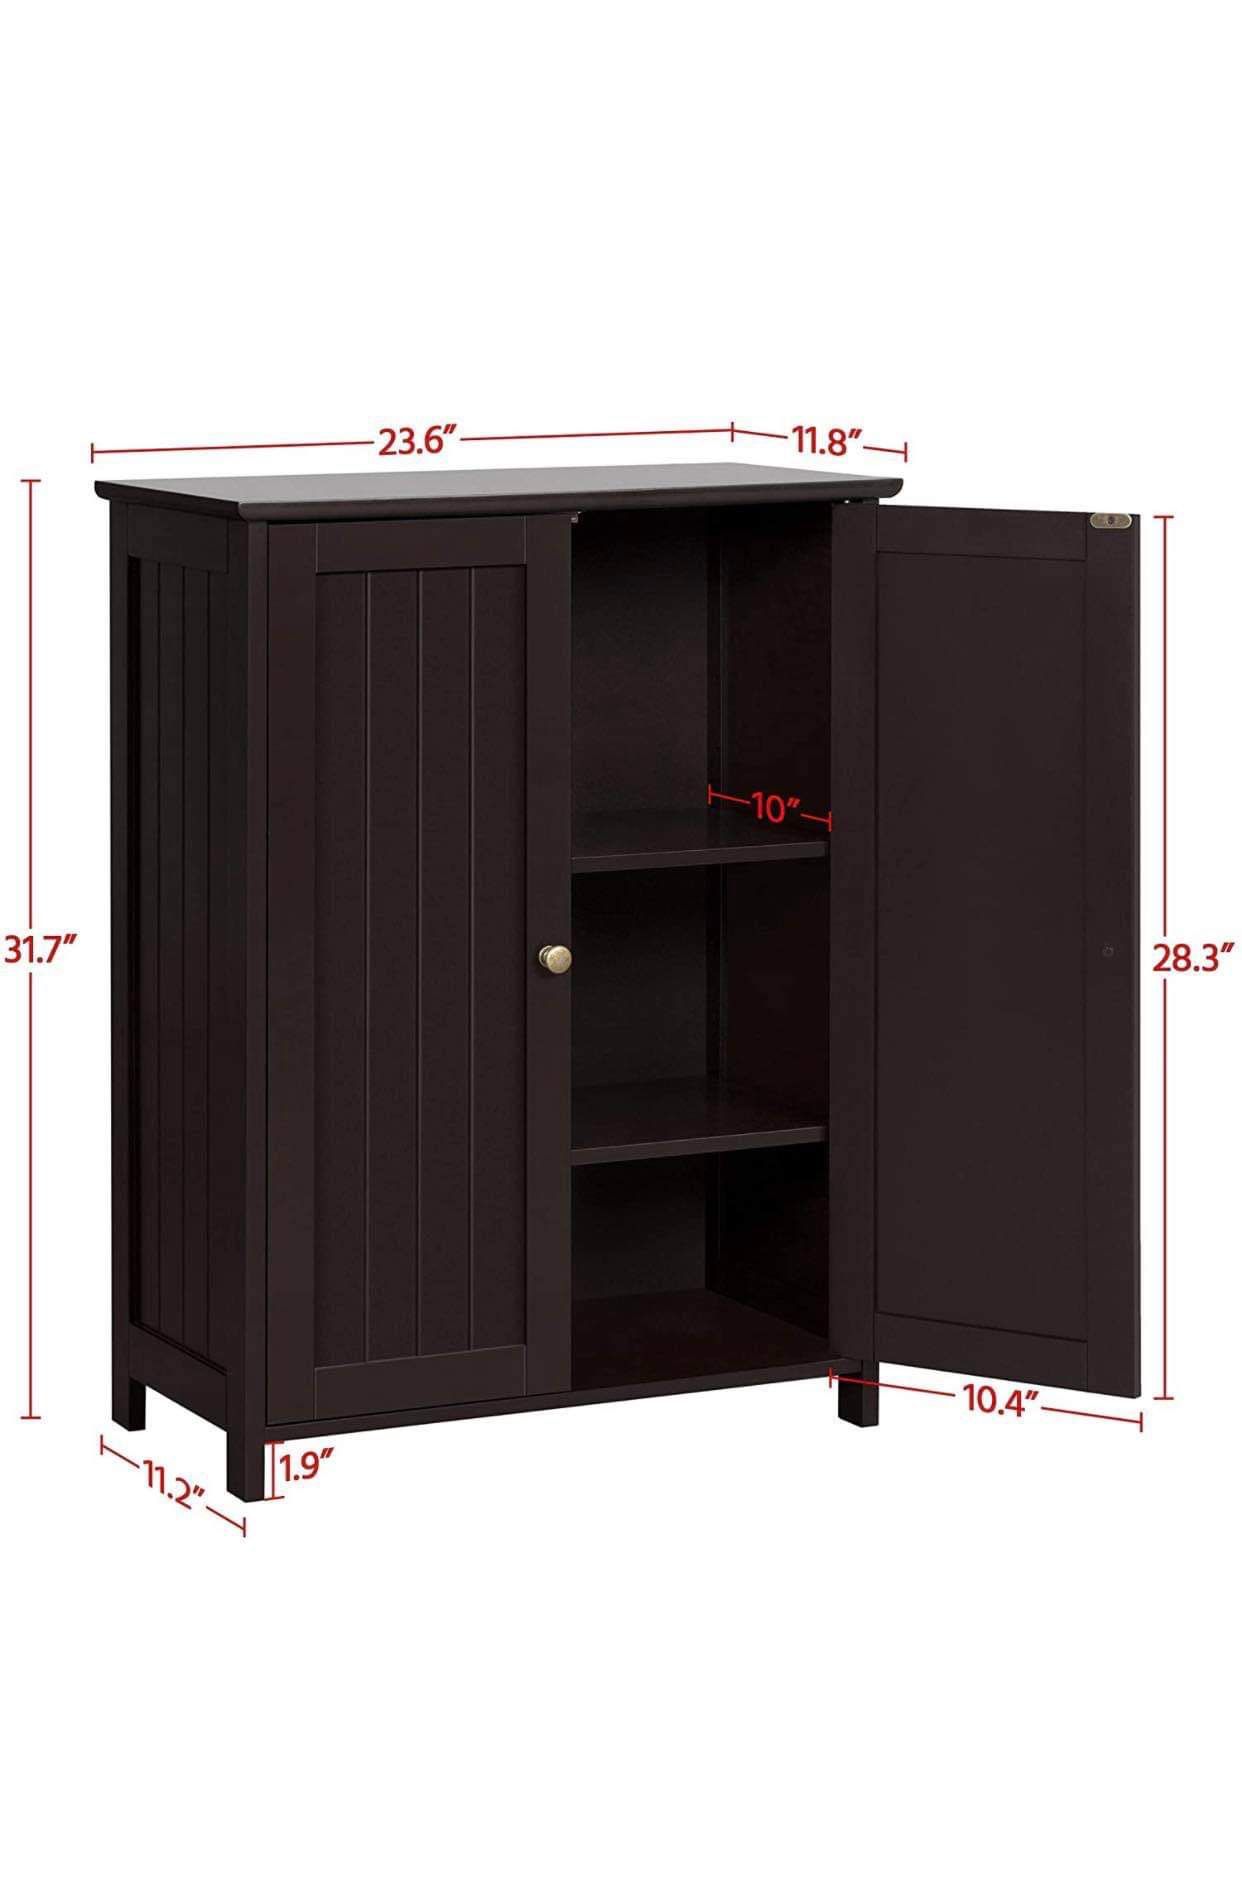 Bathroom Floor Storage Cabinet, Freestanding Wooden Cupboard with 2 Durable Doors and Adjustable Shelf Inside, Home Organizer Cabinet Espresso